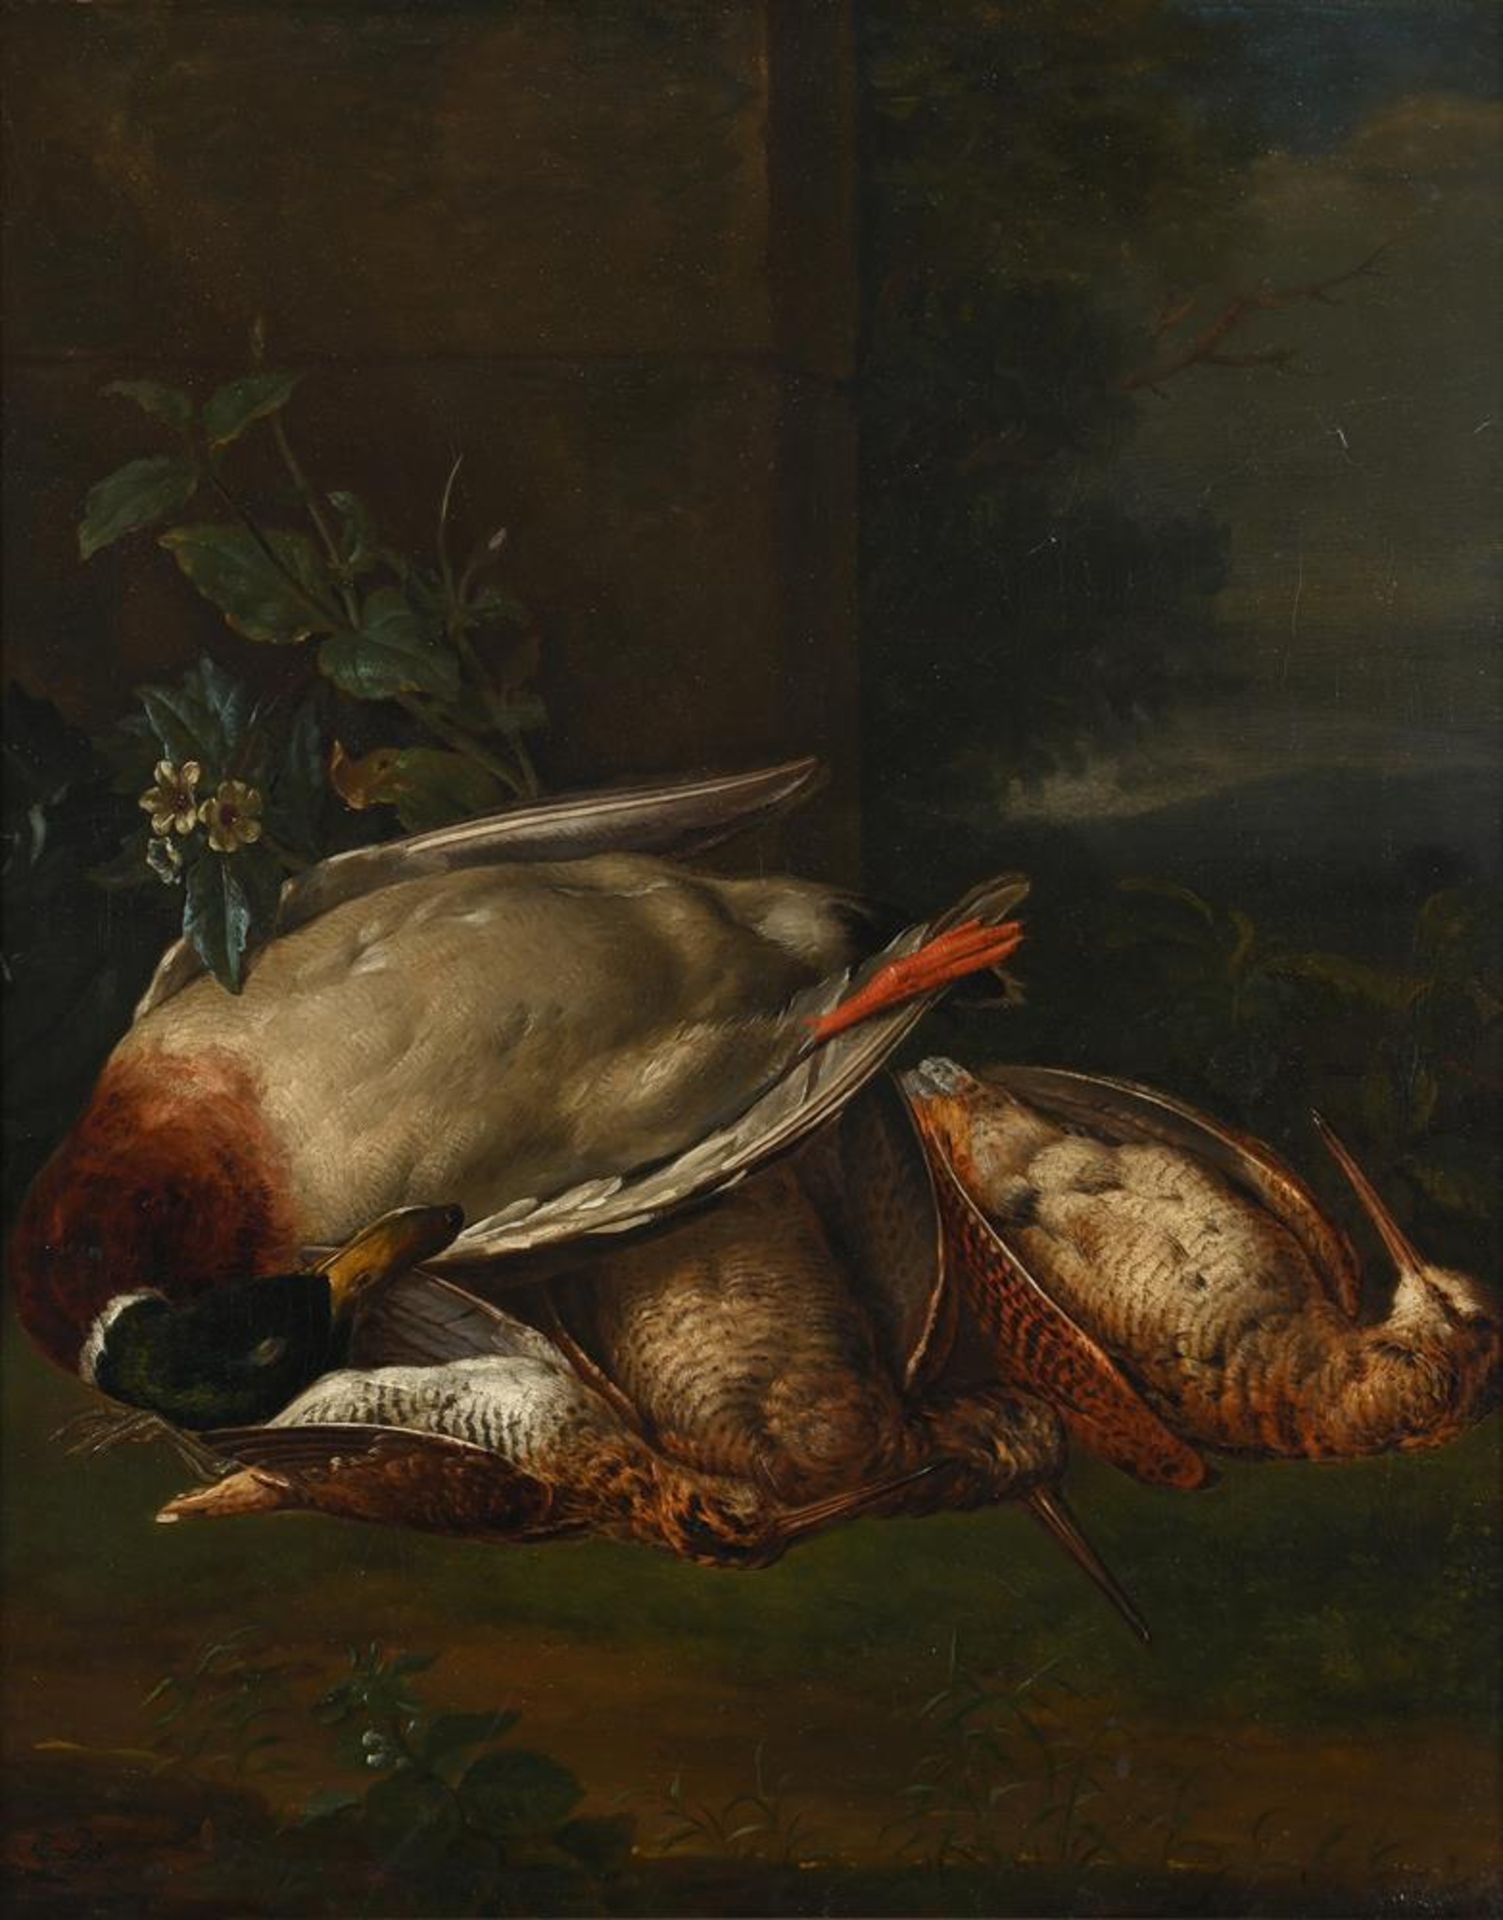 ATTRIBUTED TO PIETER RYSBRACK (DUTCH 1655-1729), STILL LIFE OF GAME BIRDS IN A LANDSCAPE